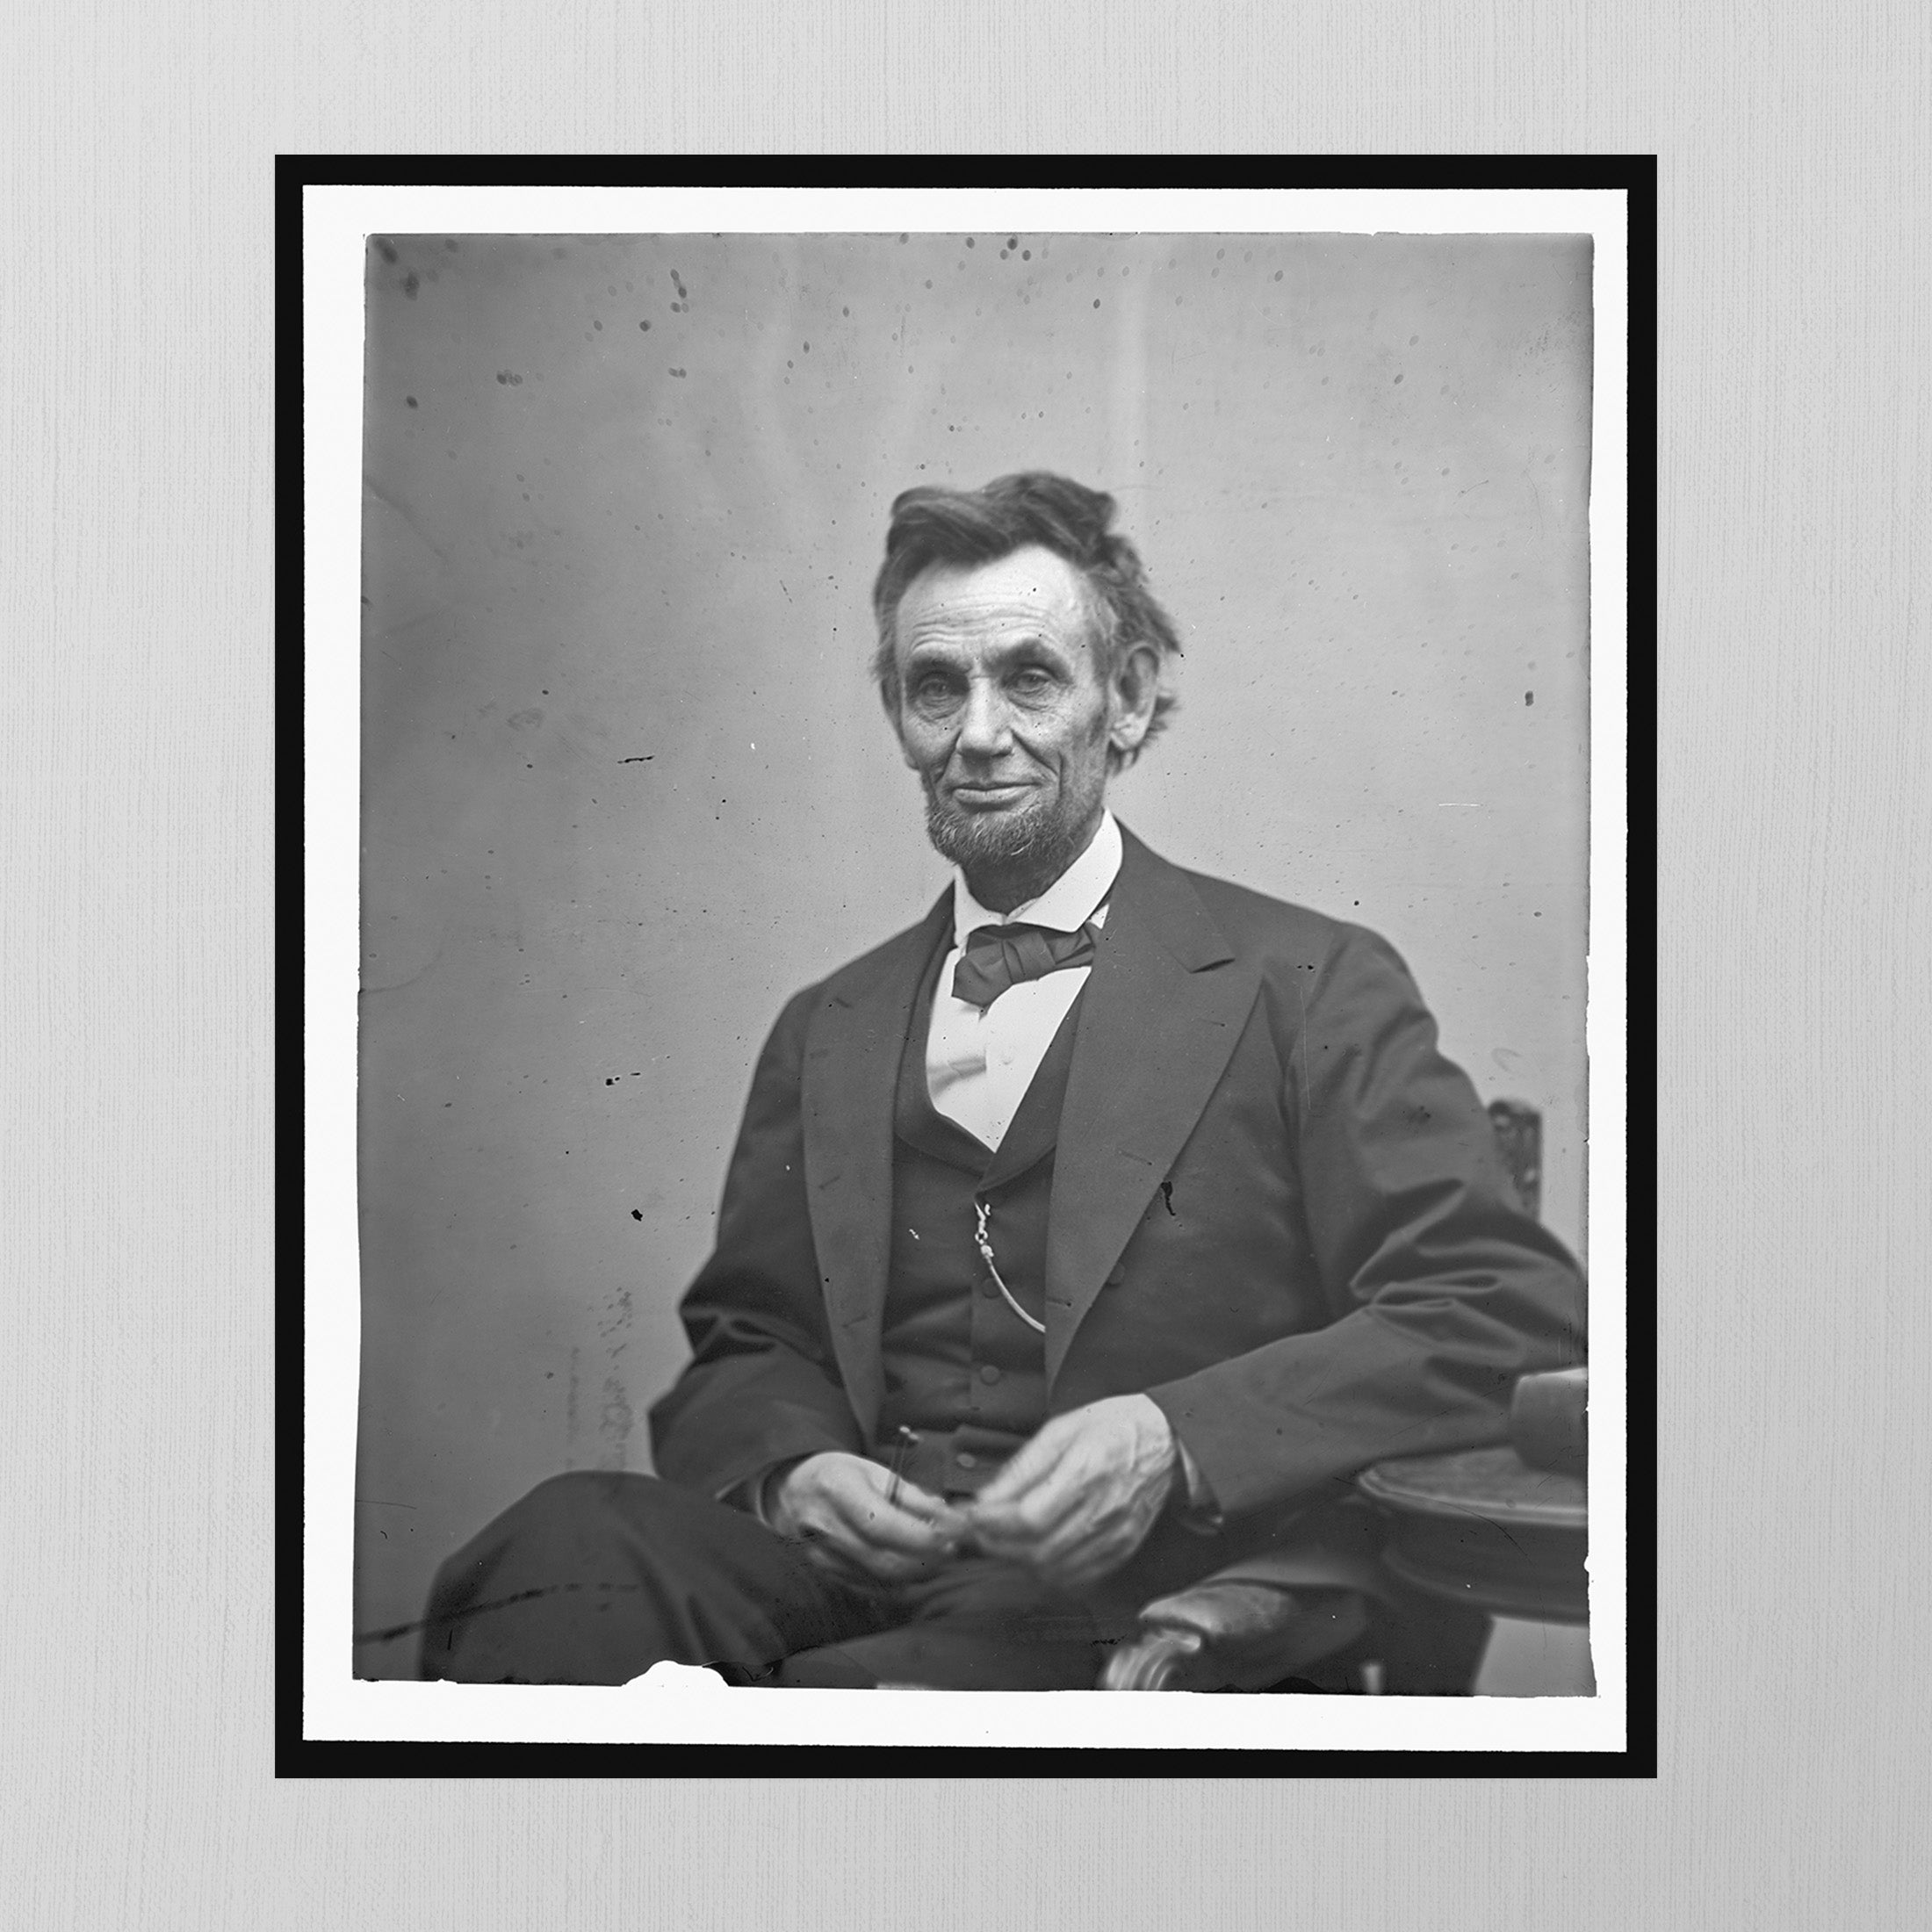 Abraham Lincoln by Alexander Gardner, 1865